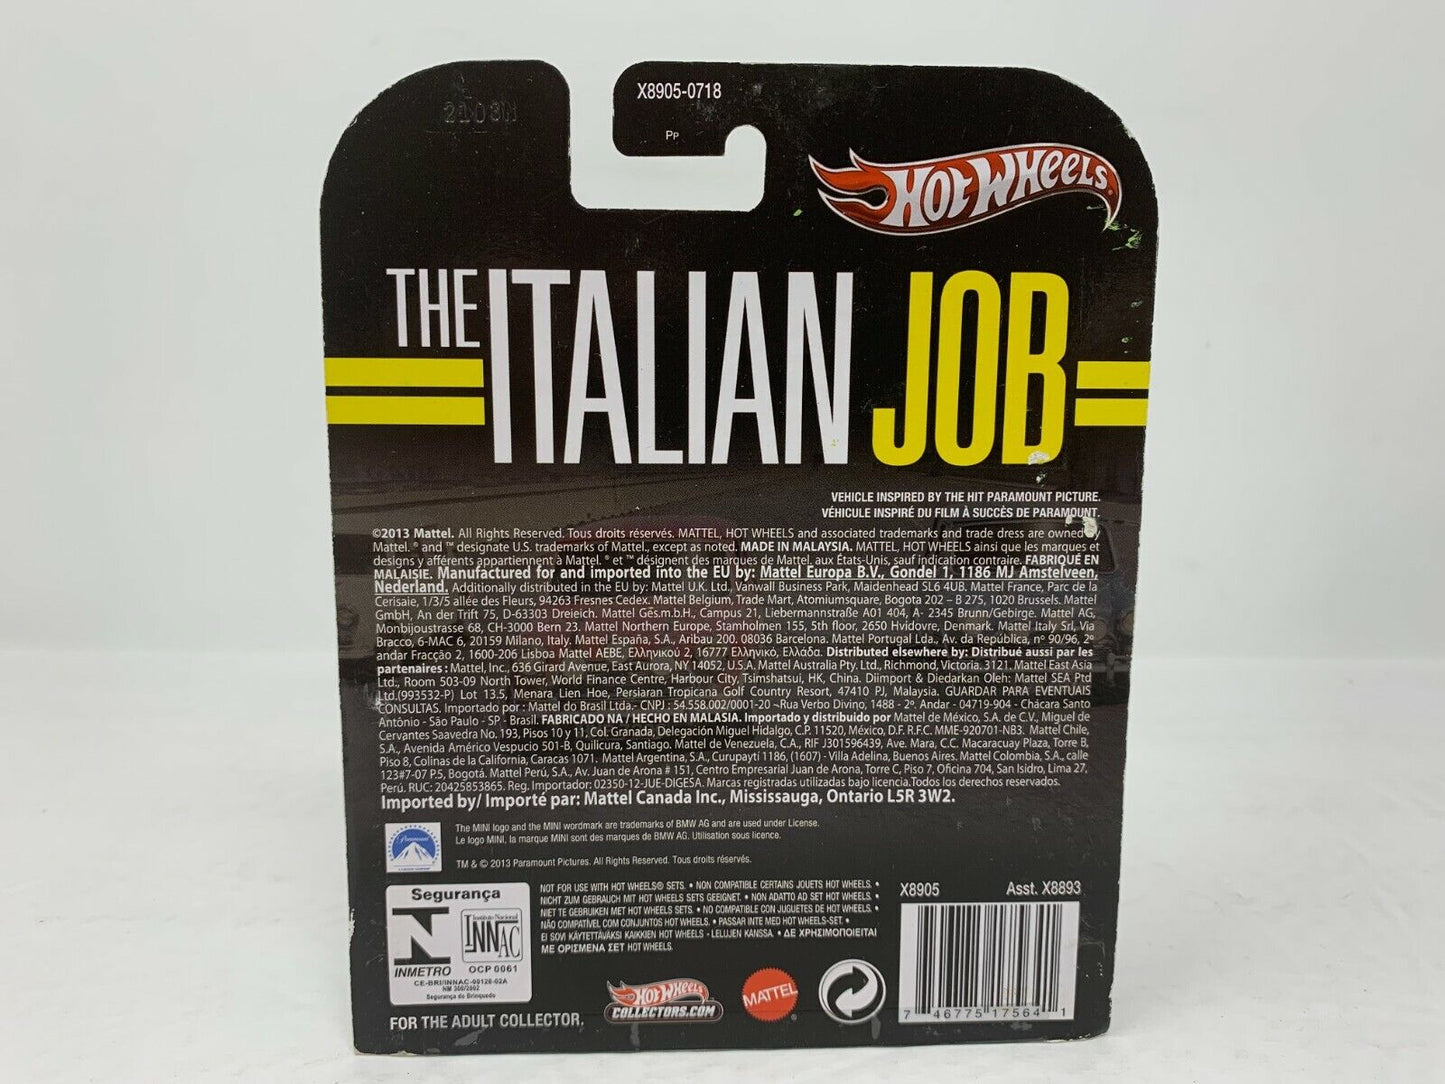 Hot Wheels Retro Entertainment The Italian Job White Morris Mini 1:64 Diecast